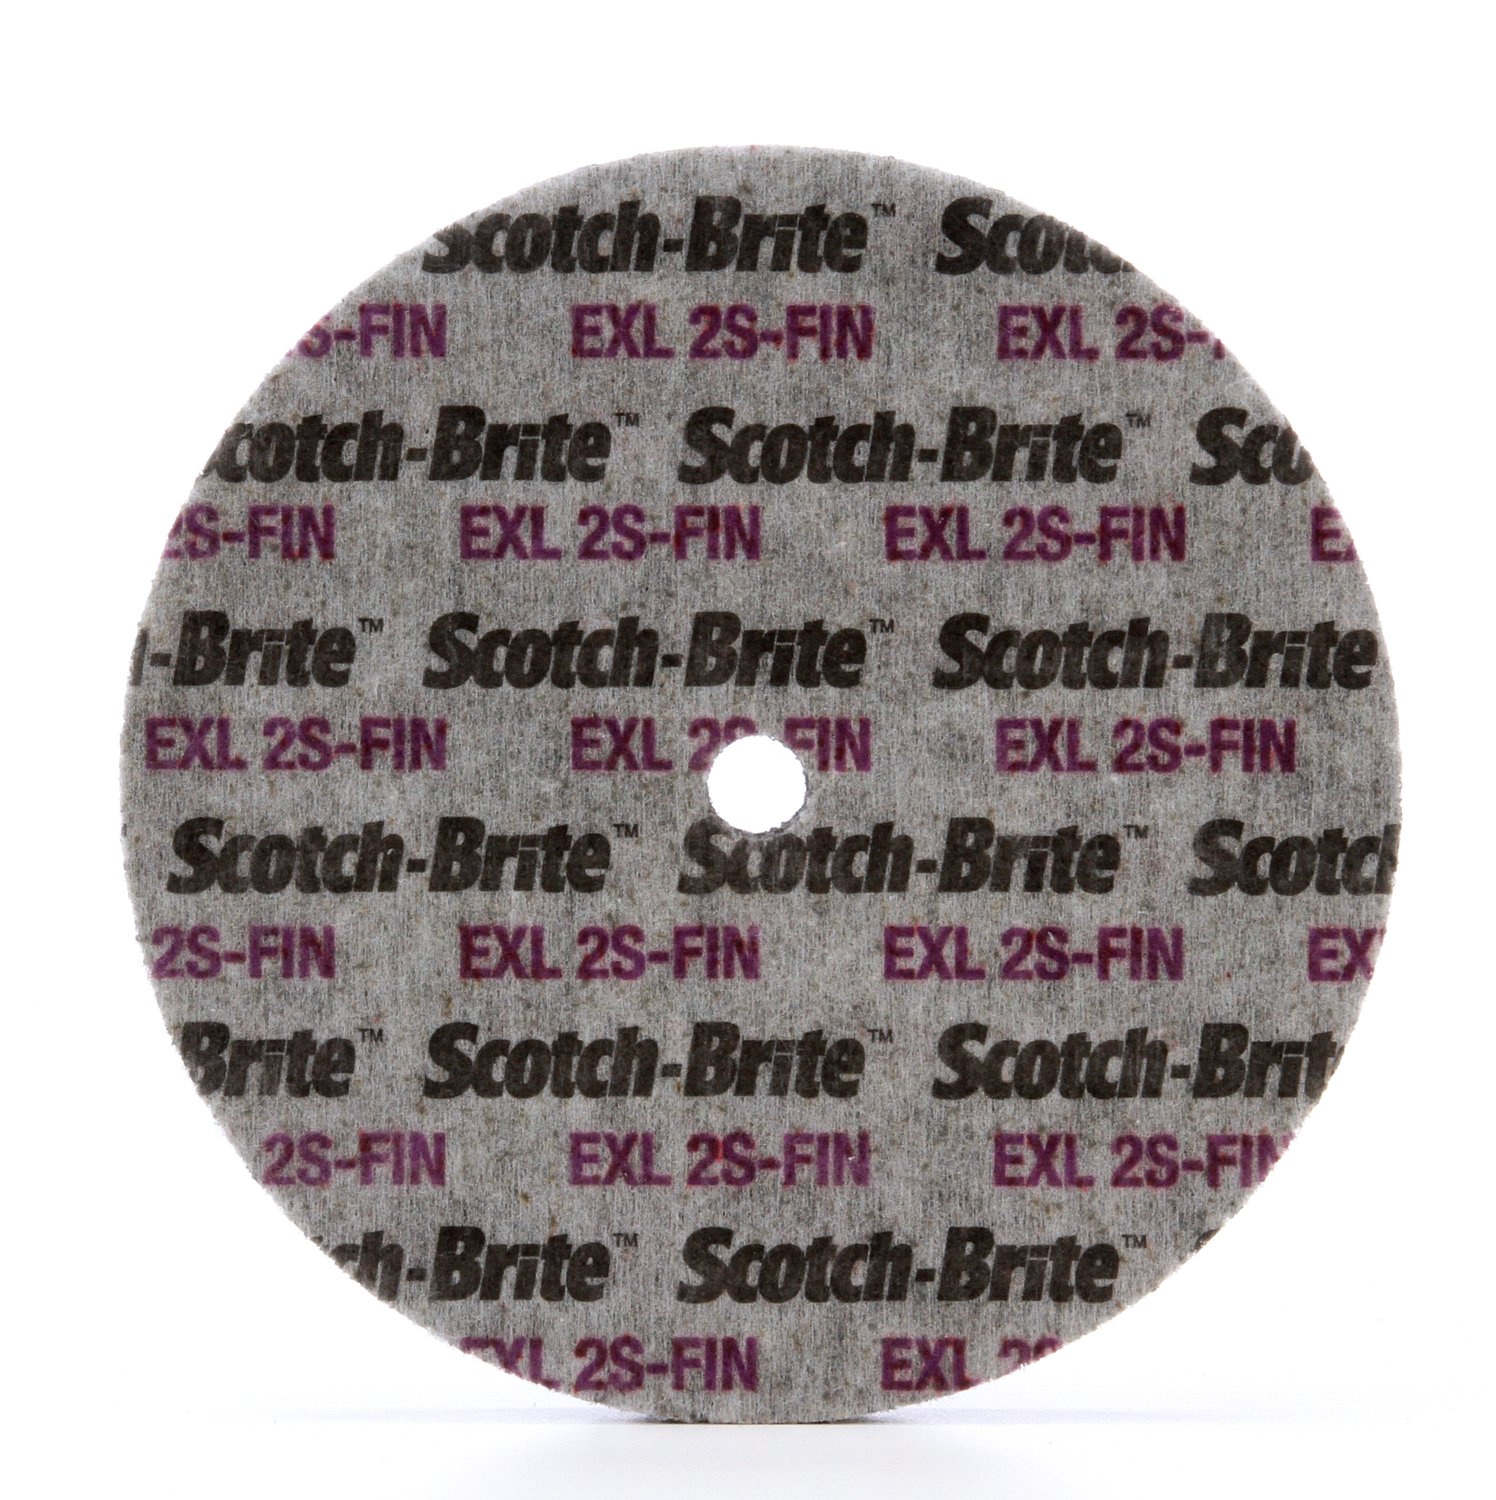 7010534334 - Scotch-Brite EXL Unitized Wheel, XL-UW, 3S Fine, 3/4 in x 1/8 in x 1/8
in